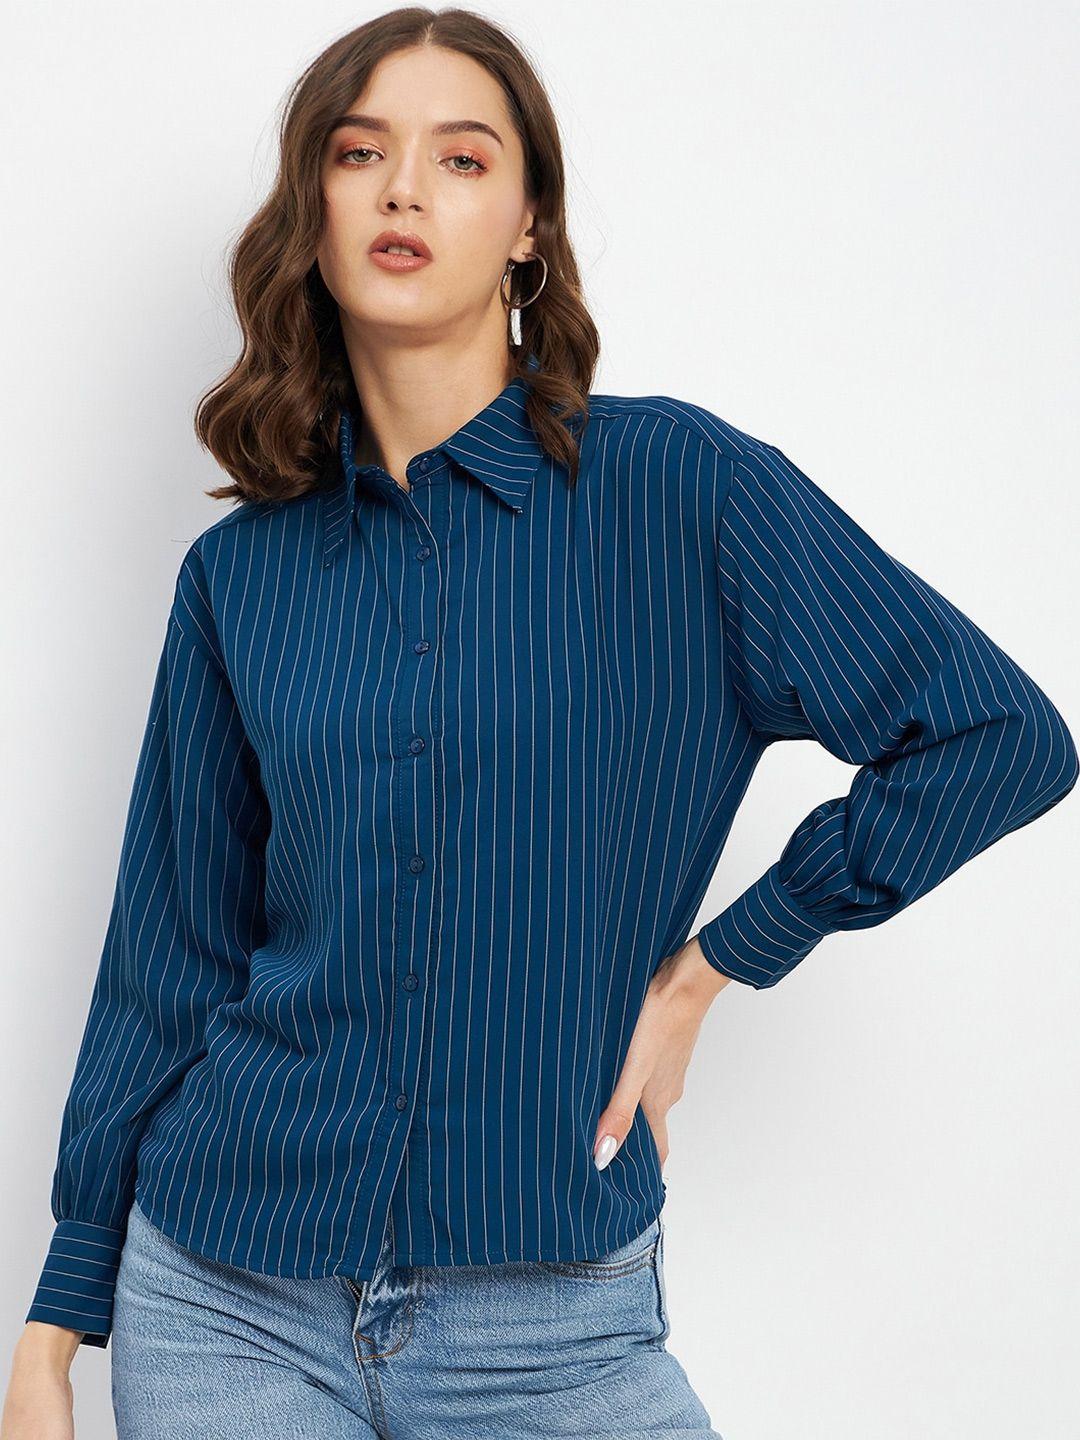 madame-vertical-striped-spread-collar-casual-shirt